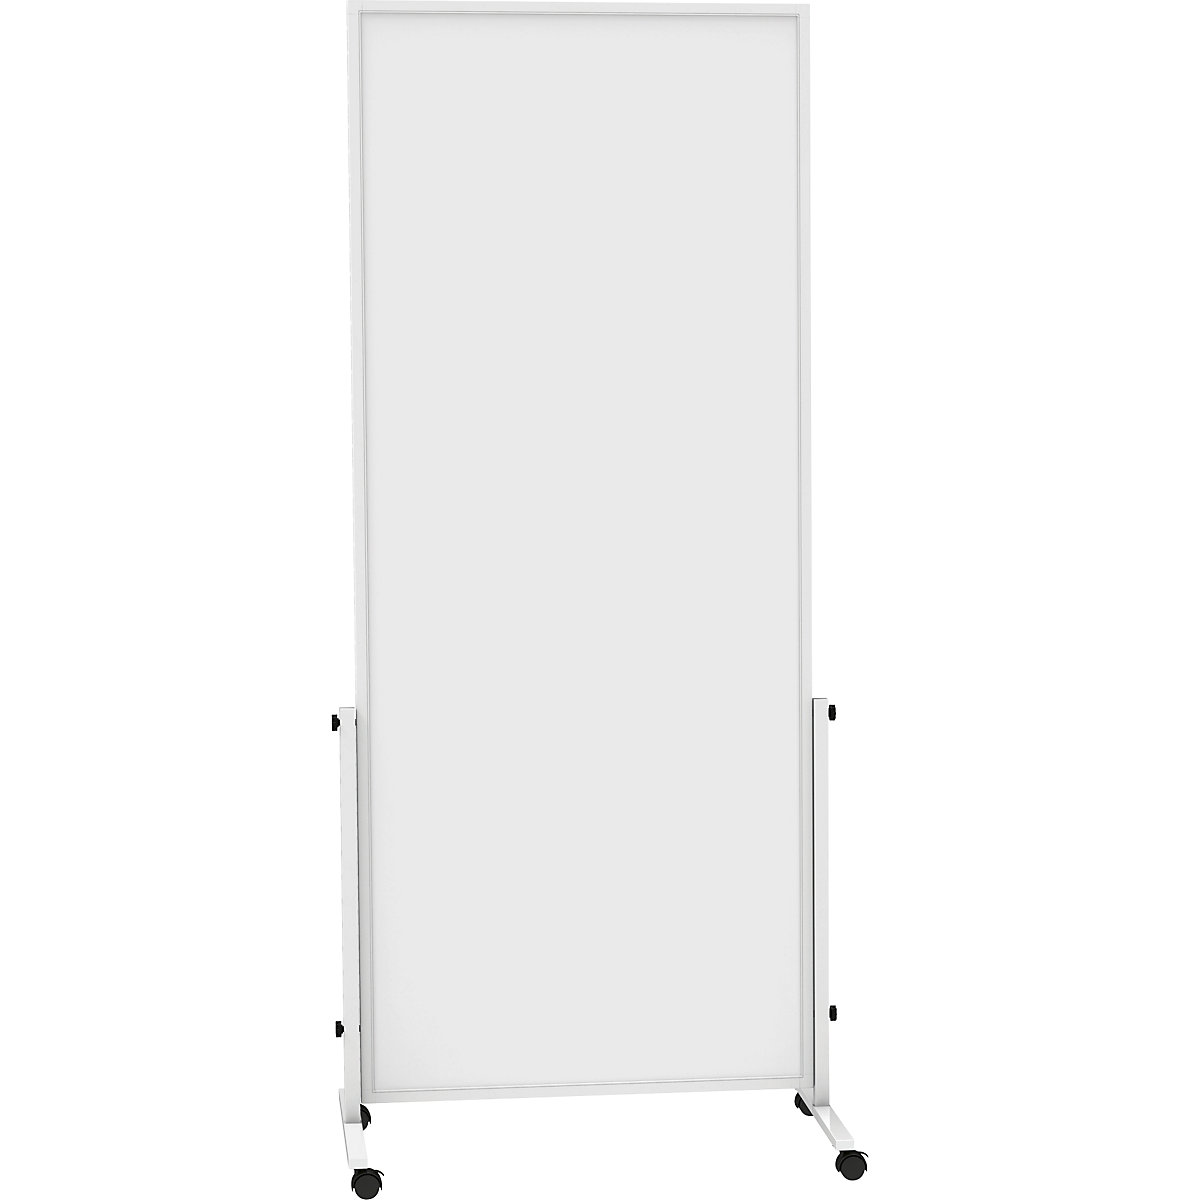 MAUL®solid easy2move mobile whiteboard – MAUL